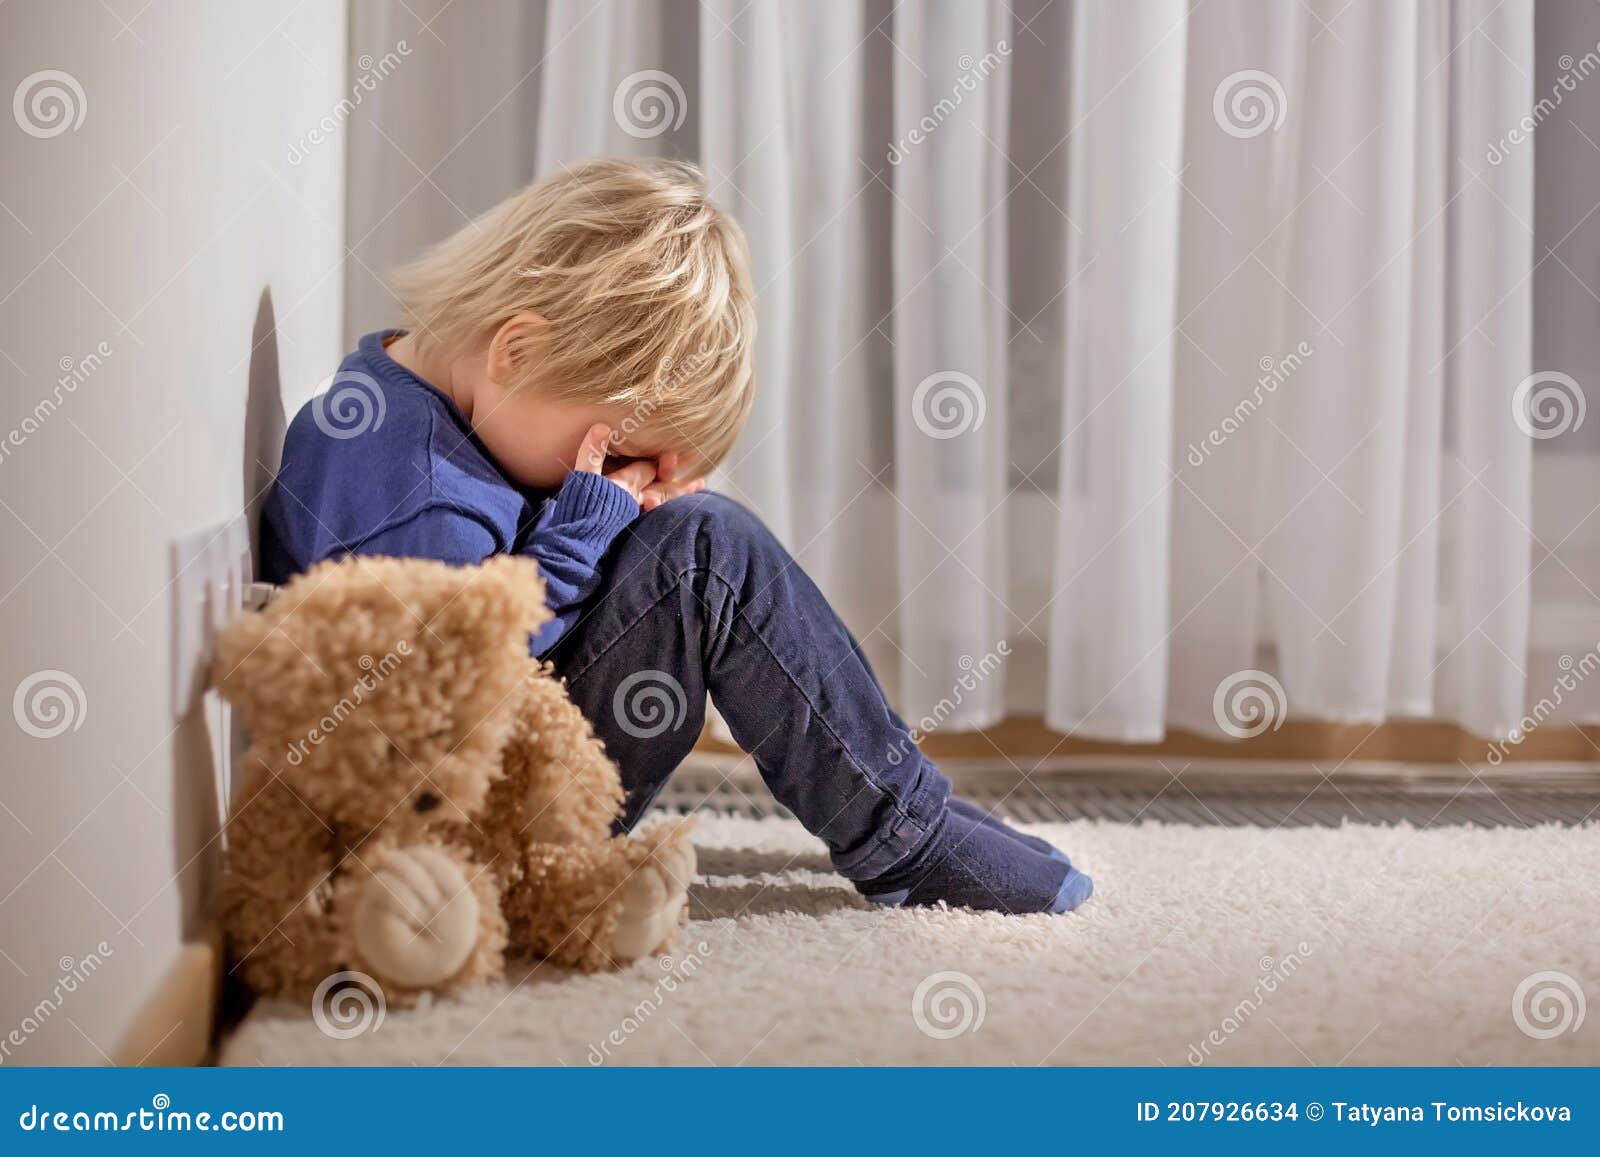 sad little toddler child, blond boy, sitting in corner with teddy punished for mischief